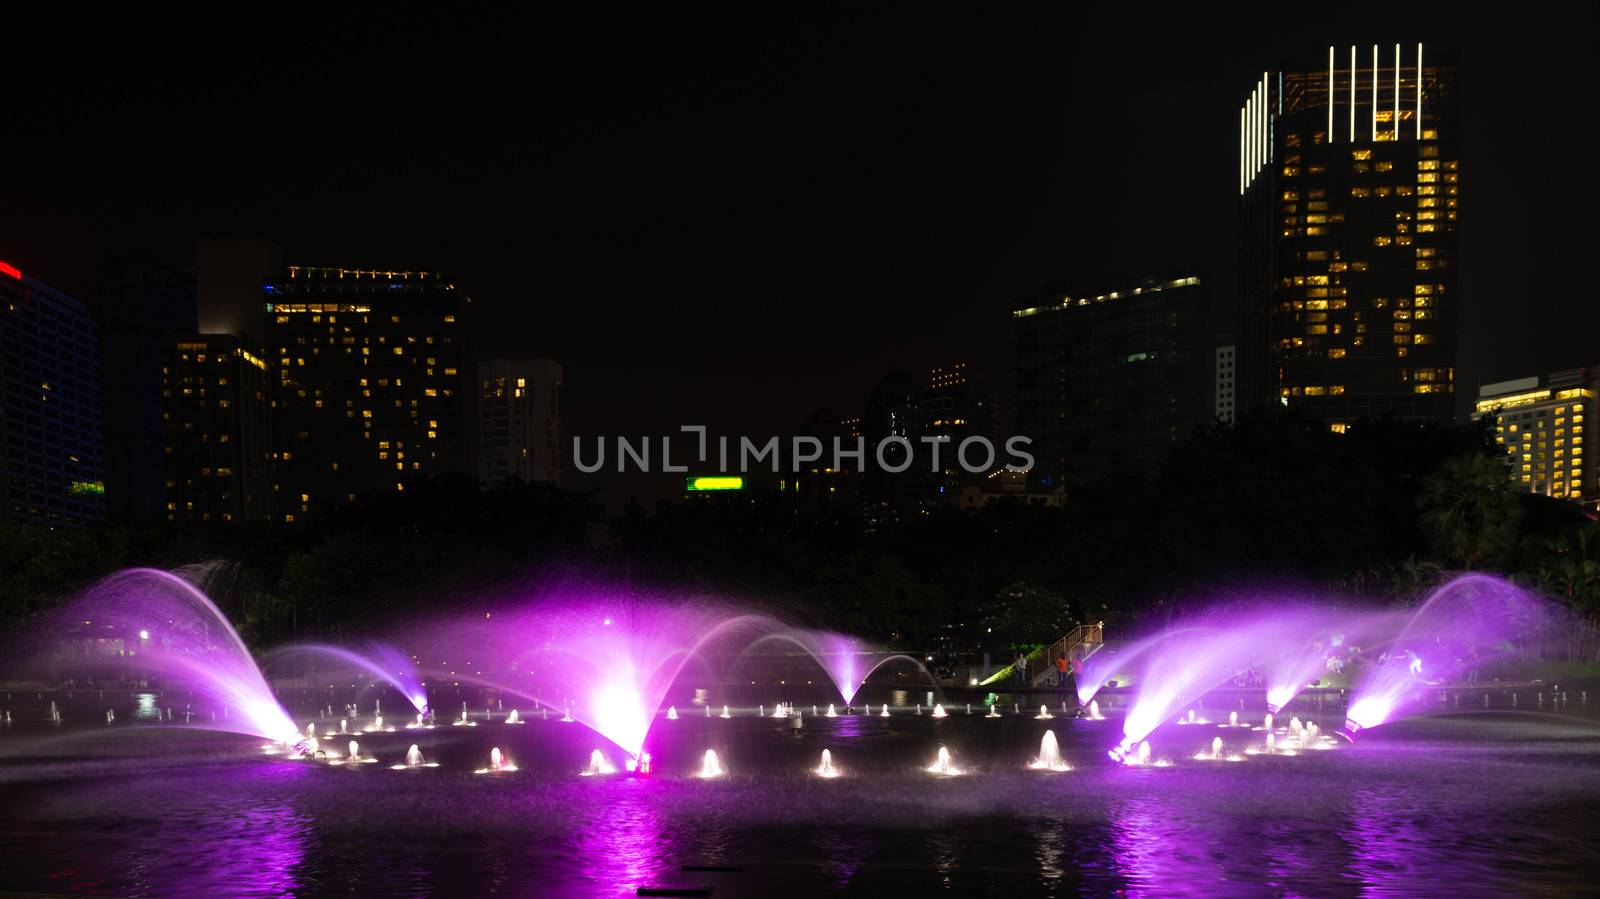 Illuminated lilac fountain at night in dark city skyline 